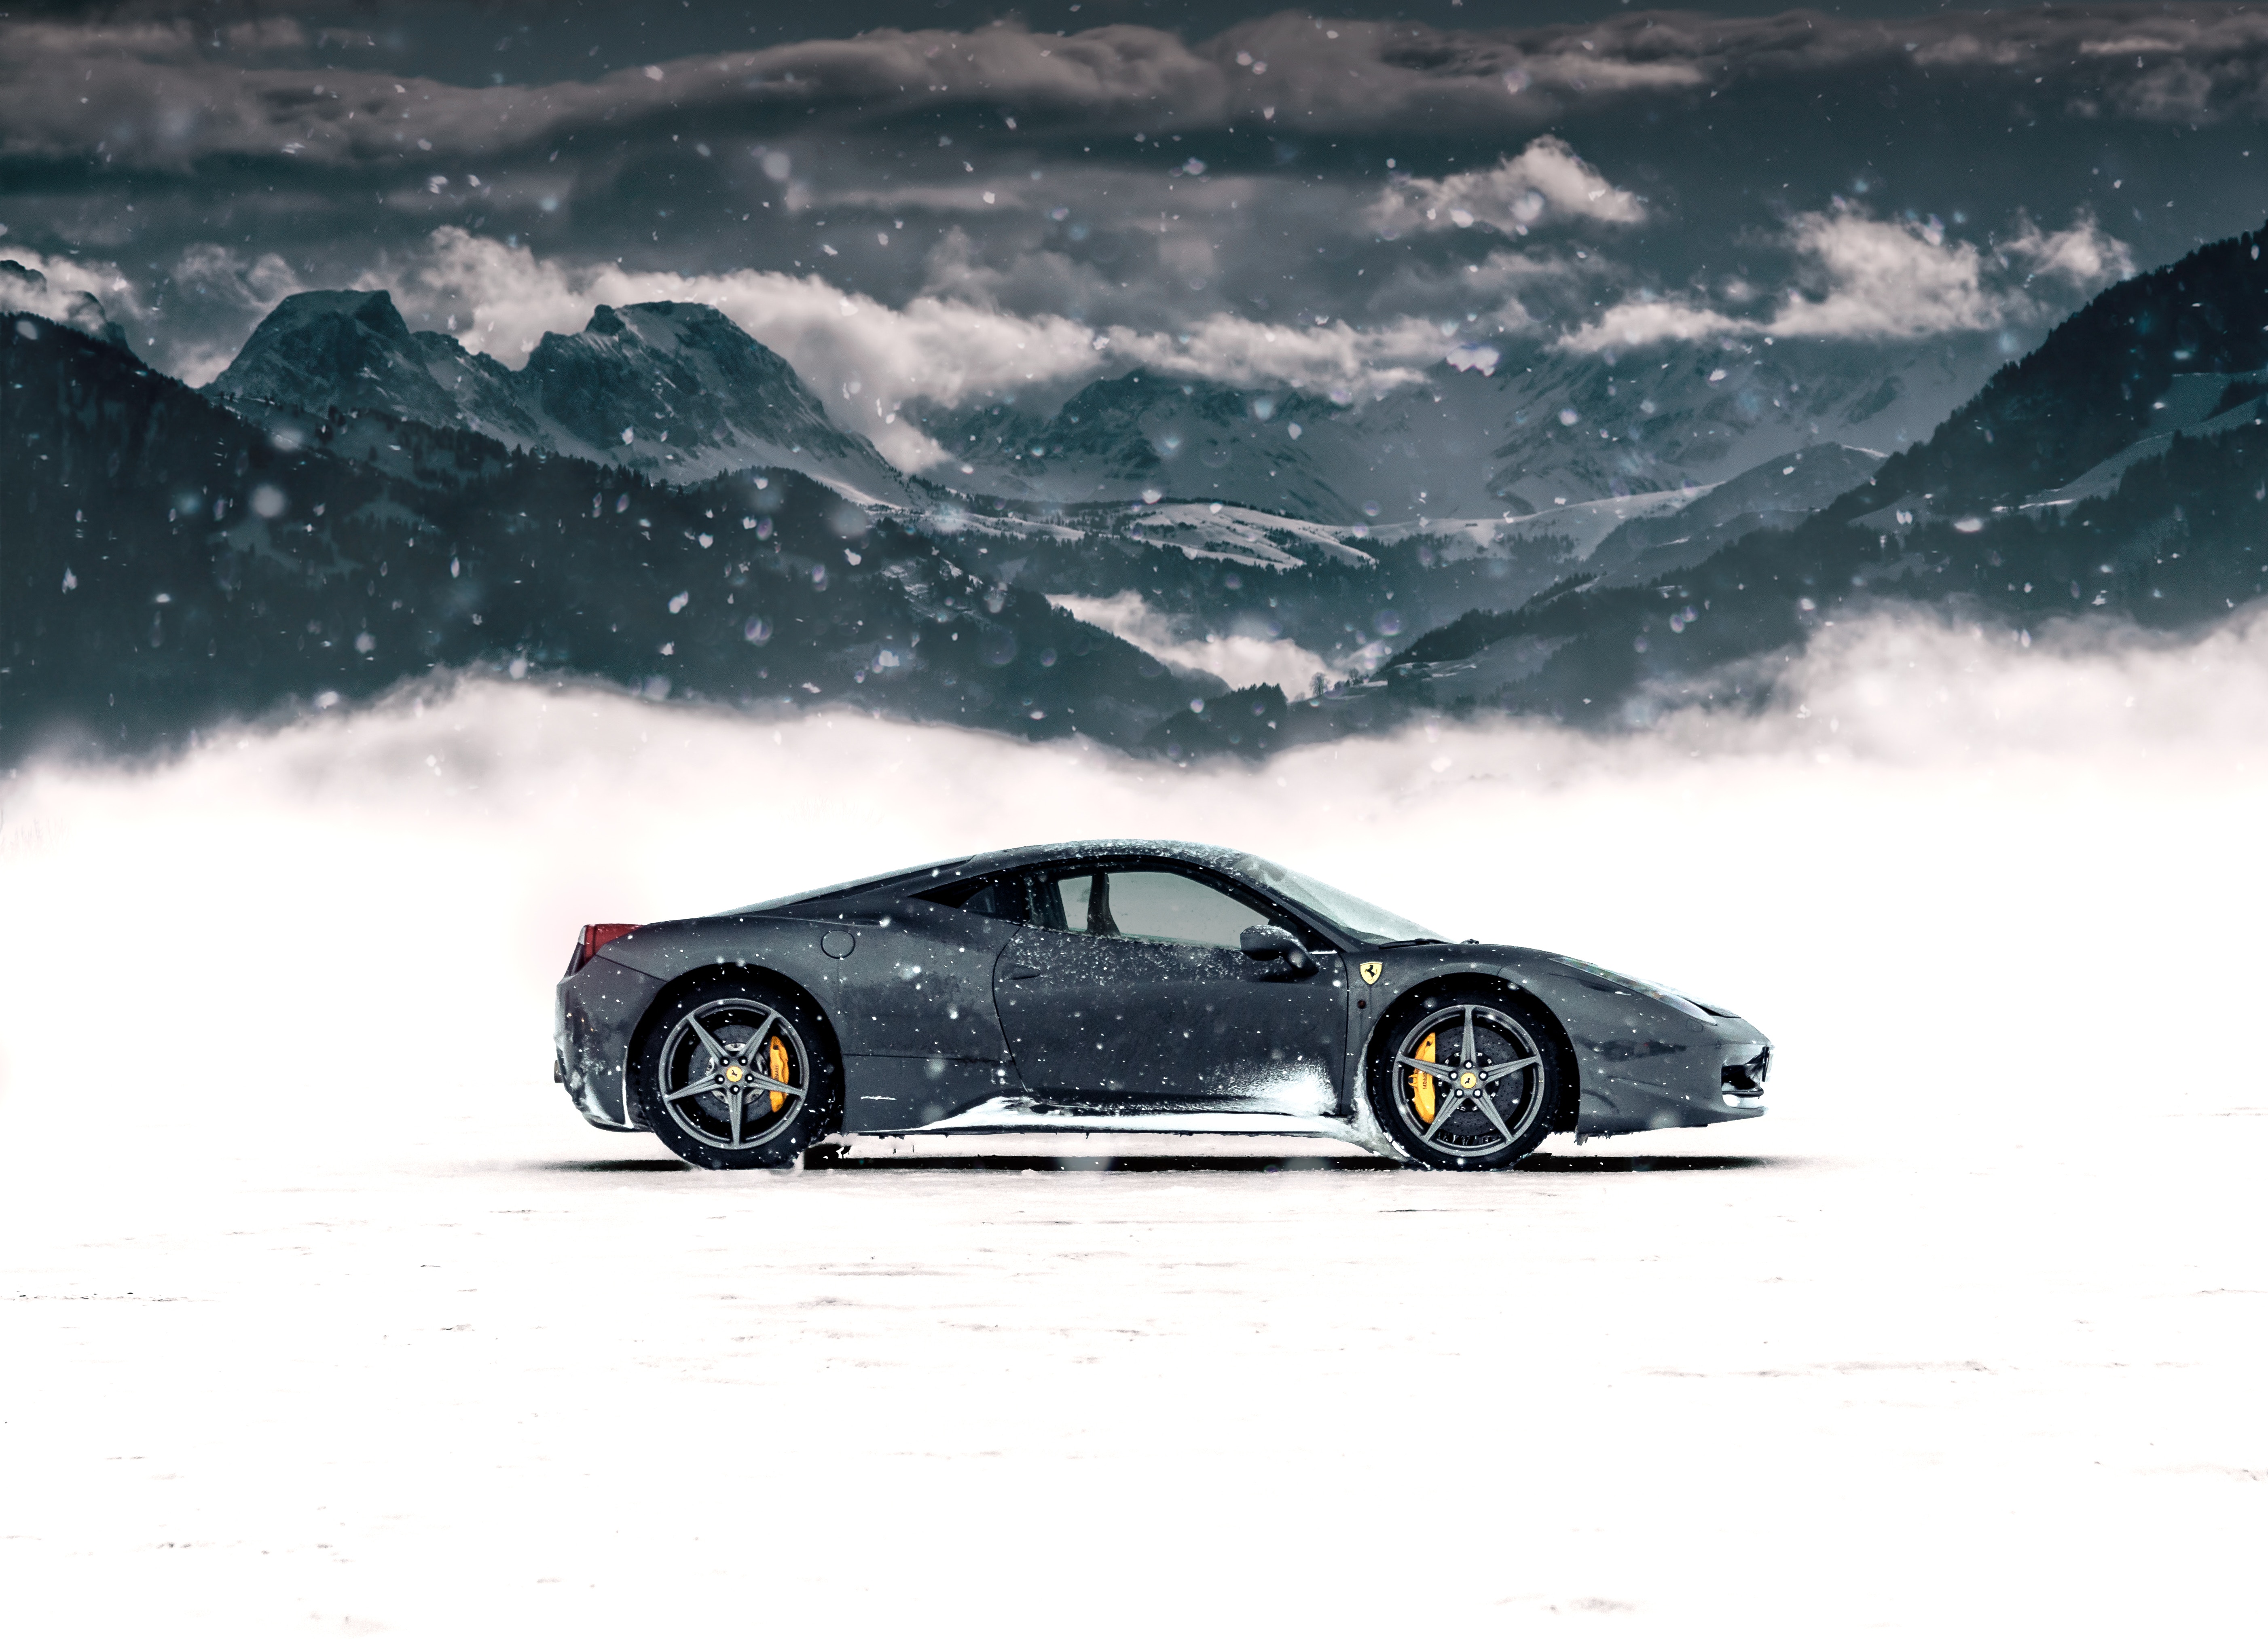 ferrari, sports, winter, mountains, snow, cars, grey, sports car, side view, ferrari 458 italia